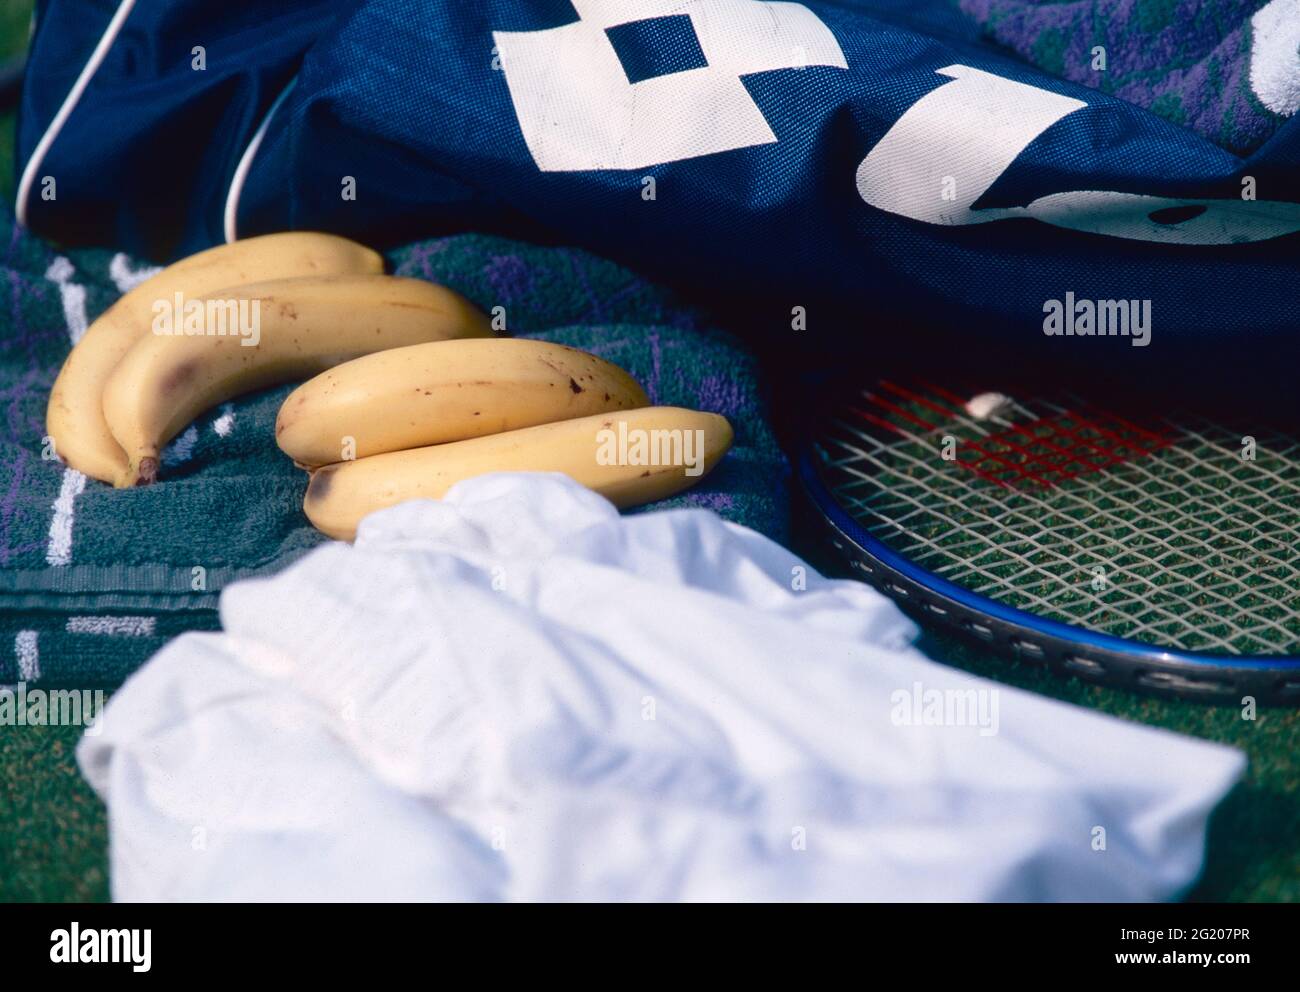 Bananas and tennis racket Stock Photo